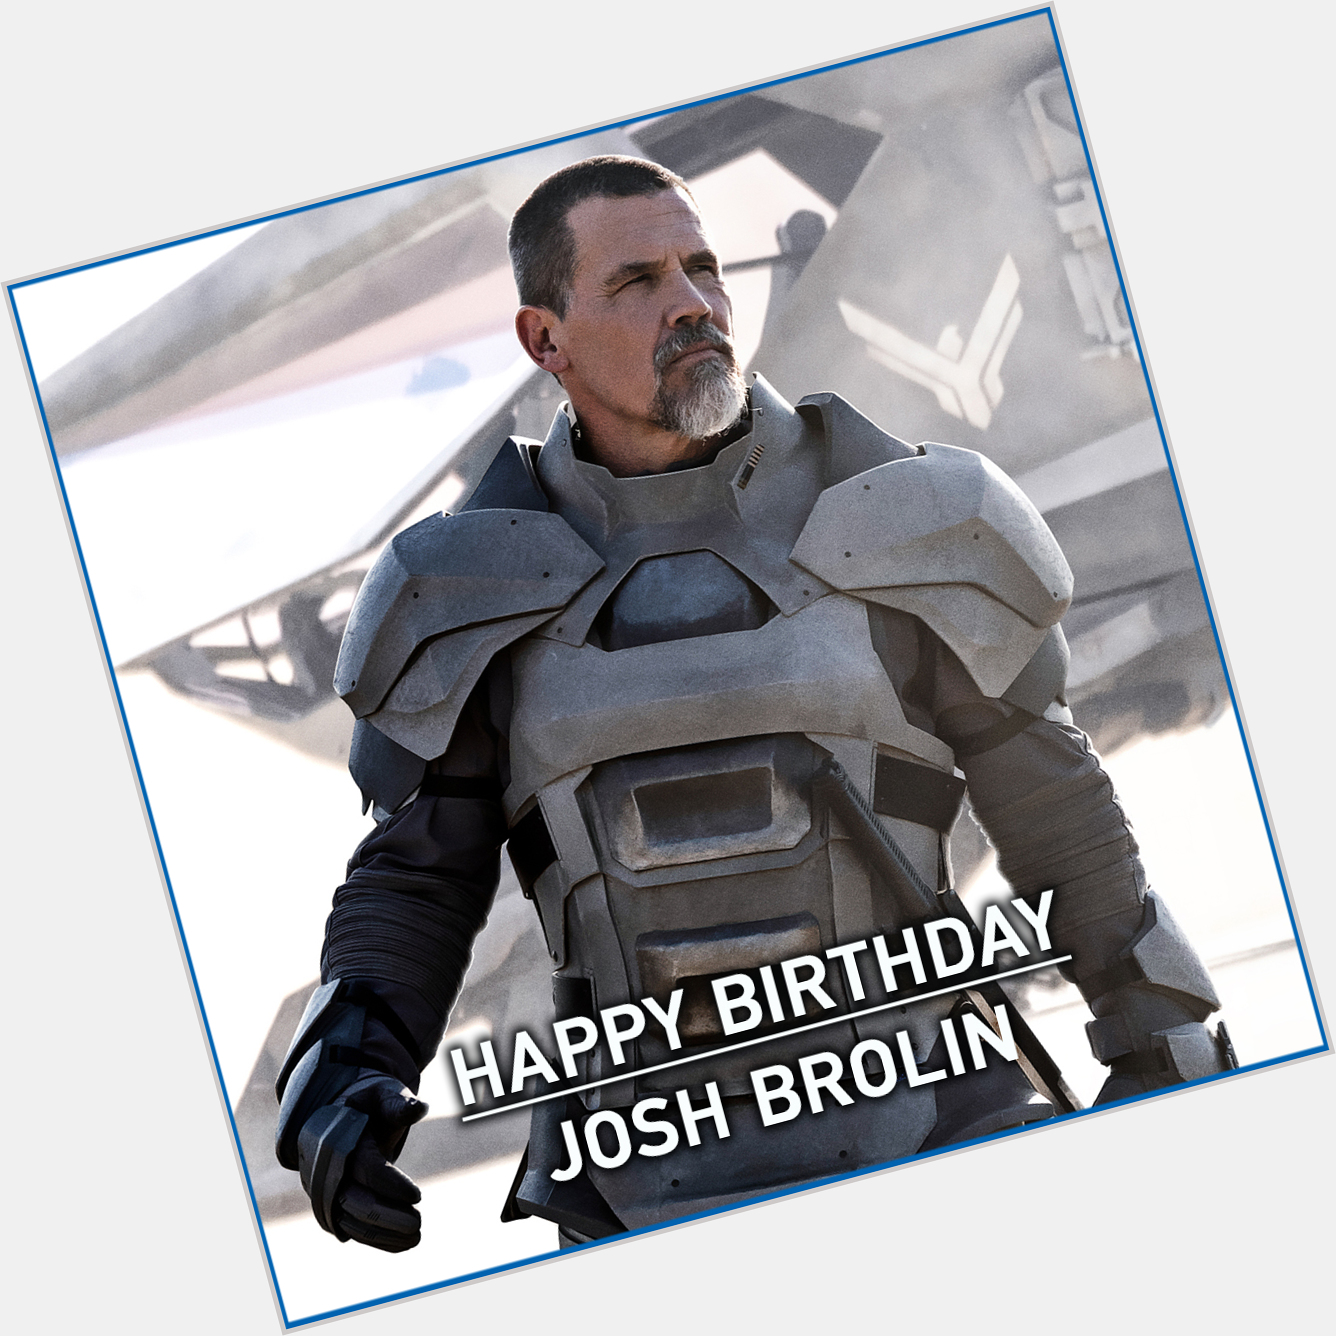 Happy Birthday to Josh Brolin, who will be next seen in Denis Villeneuve s upcoming Sci-Fi film 